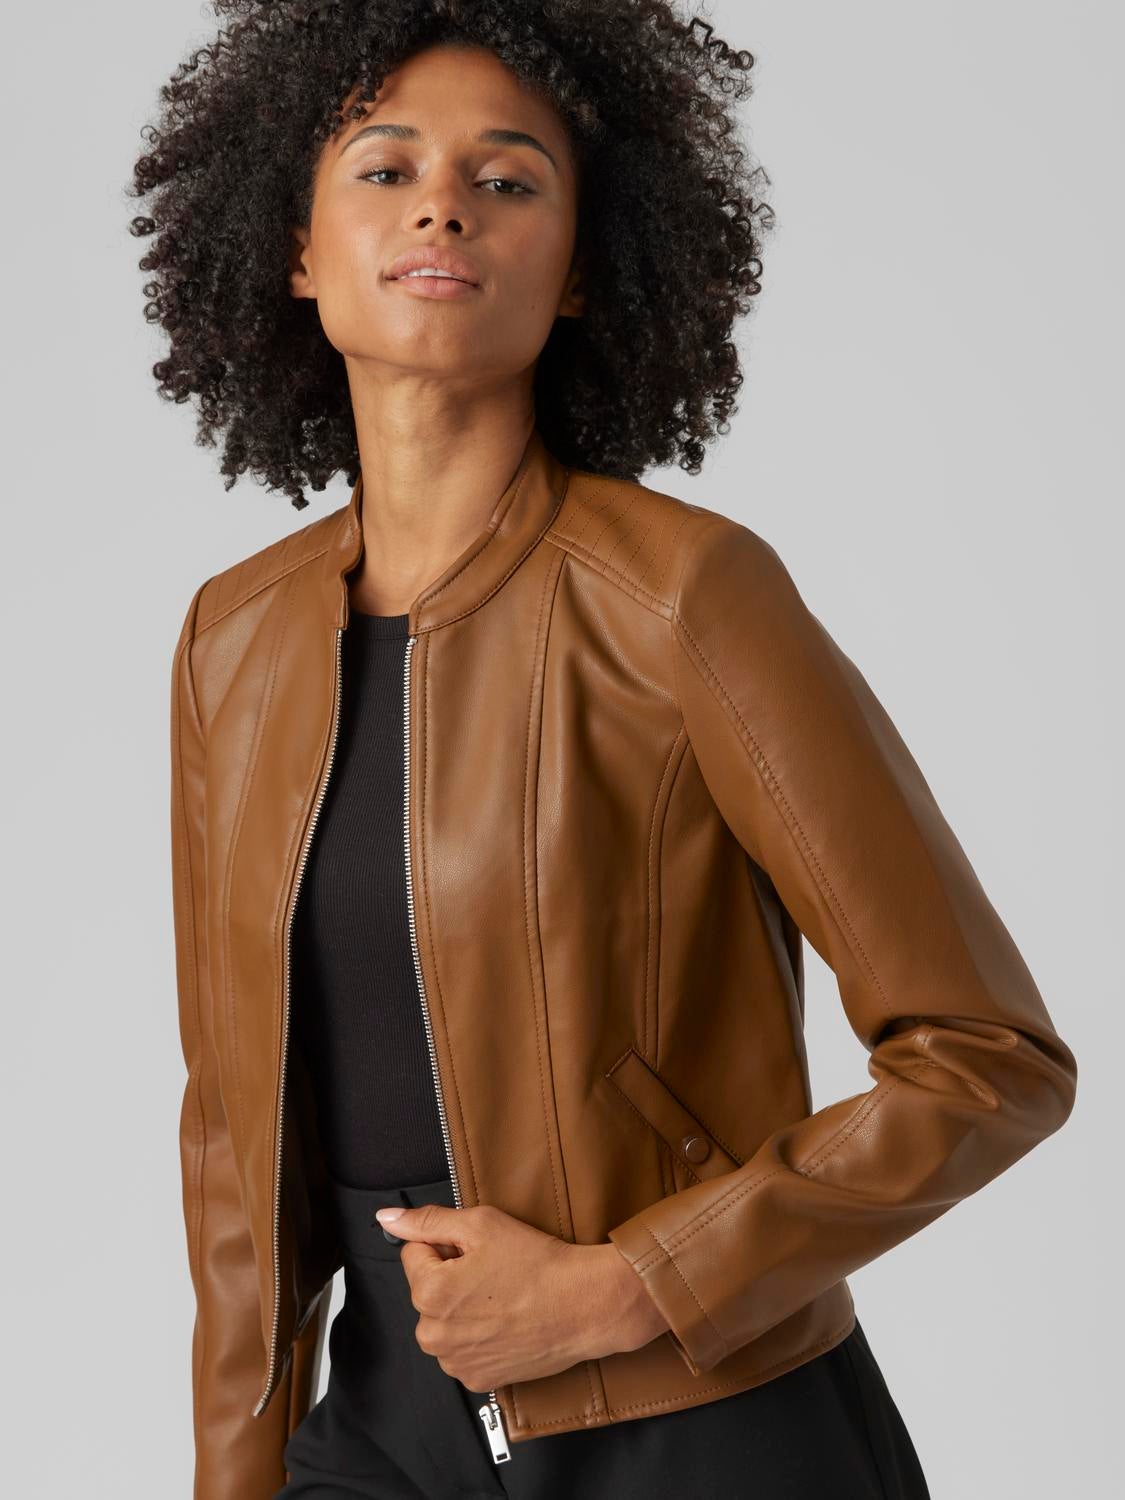 $69 Vero Moda Women's Black Khloe Full-Zip Faux Leather Moto Jacket Size M  | eBay